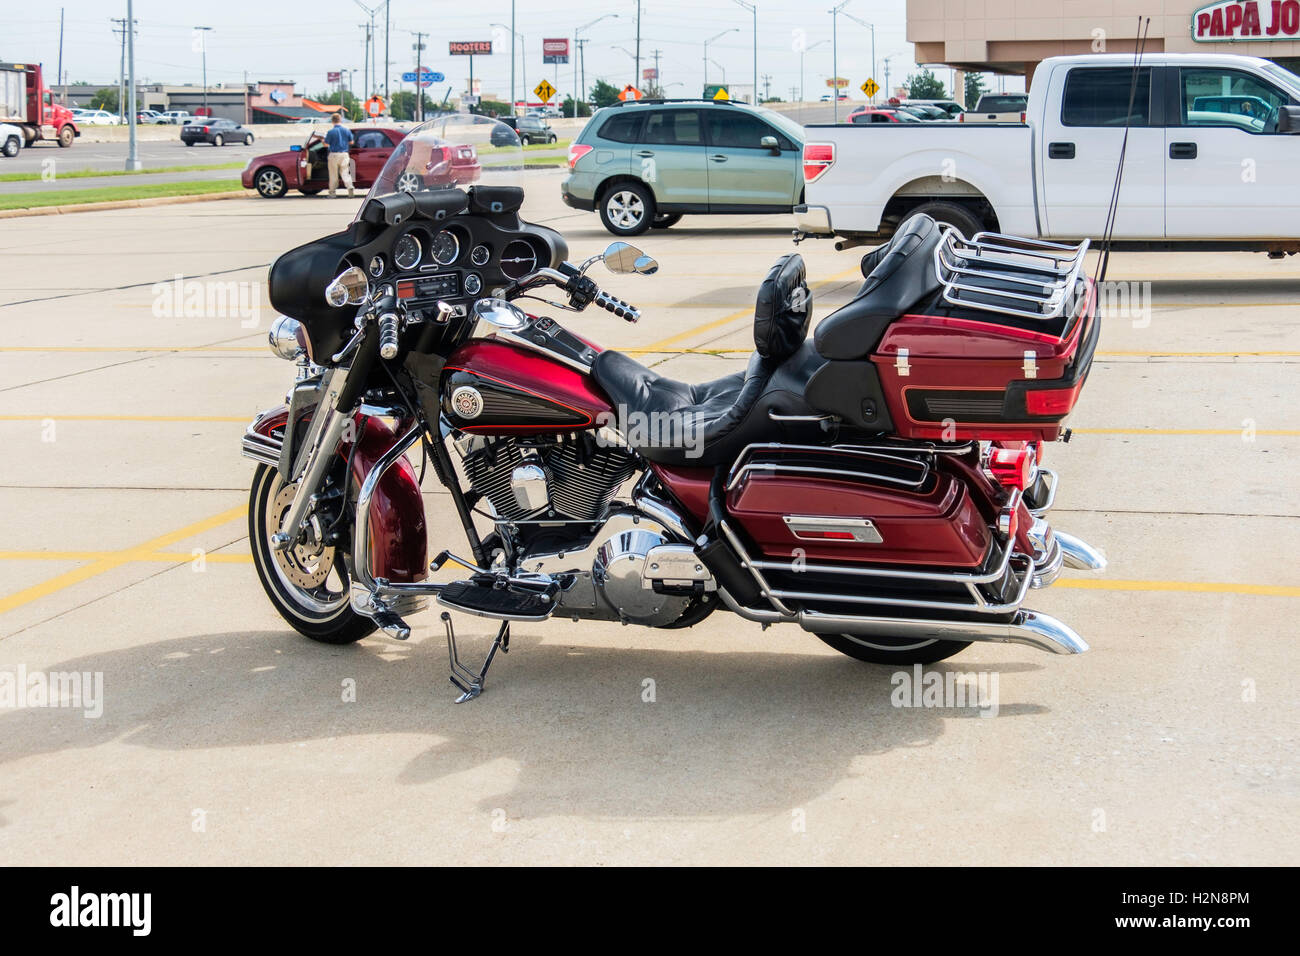 Un rouge profond Harley Davidson Ultra Classic Moto, parqué. Oklahoma City, Oklahoma, USA. Banque D'Images